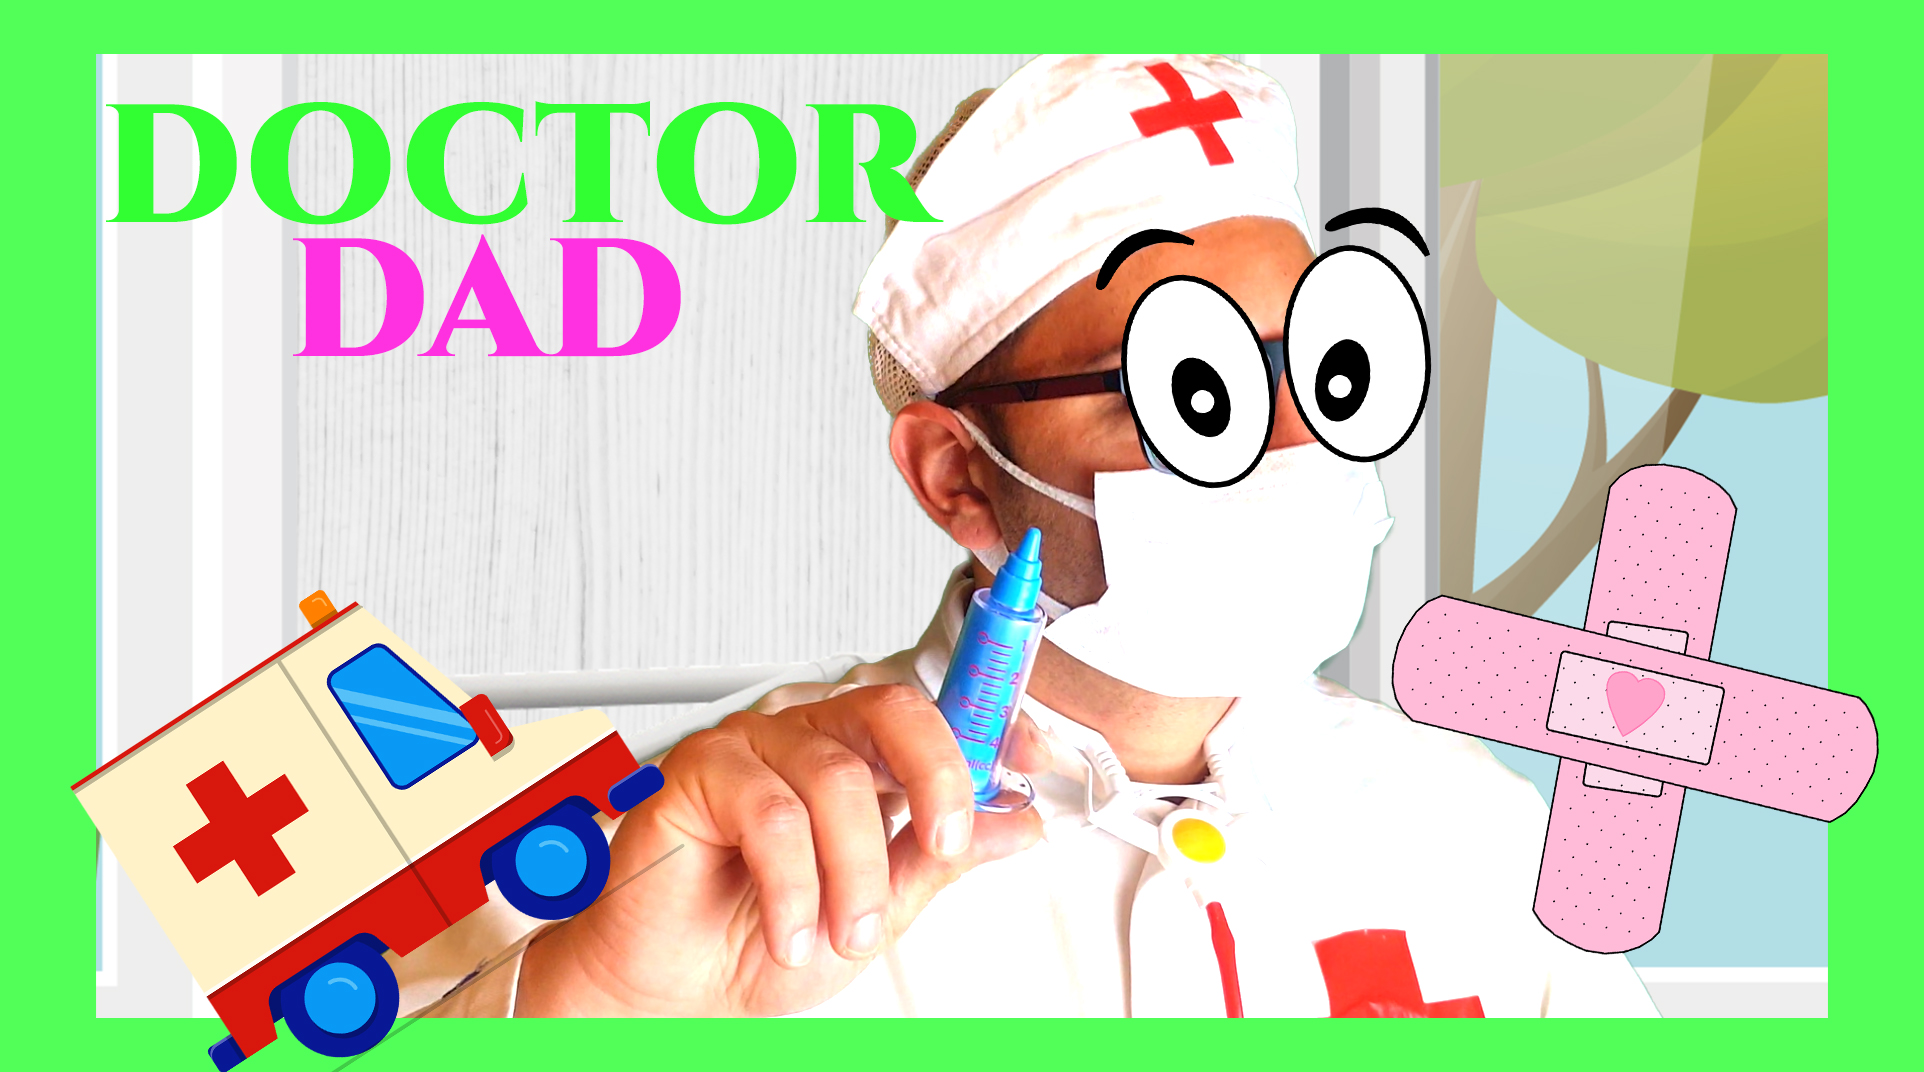 Doctor dad